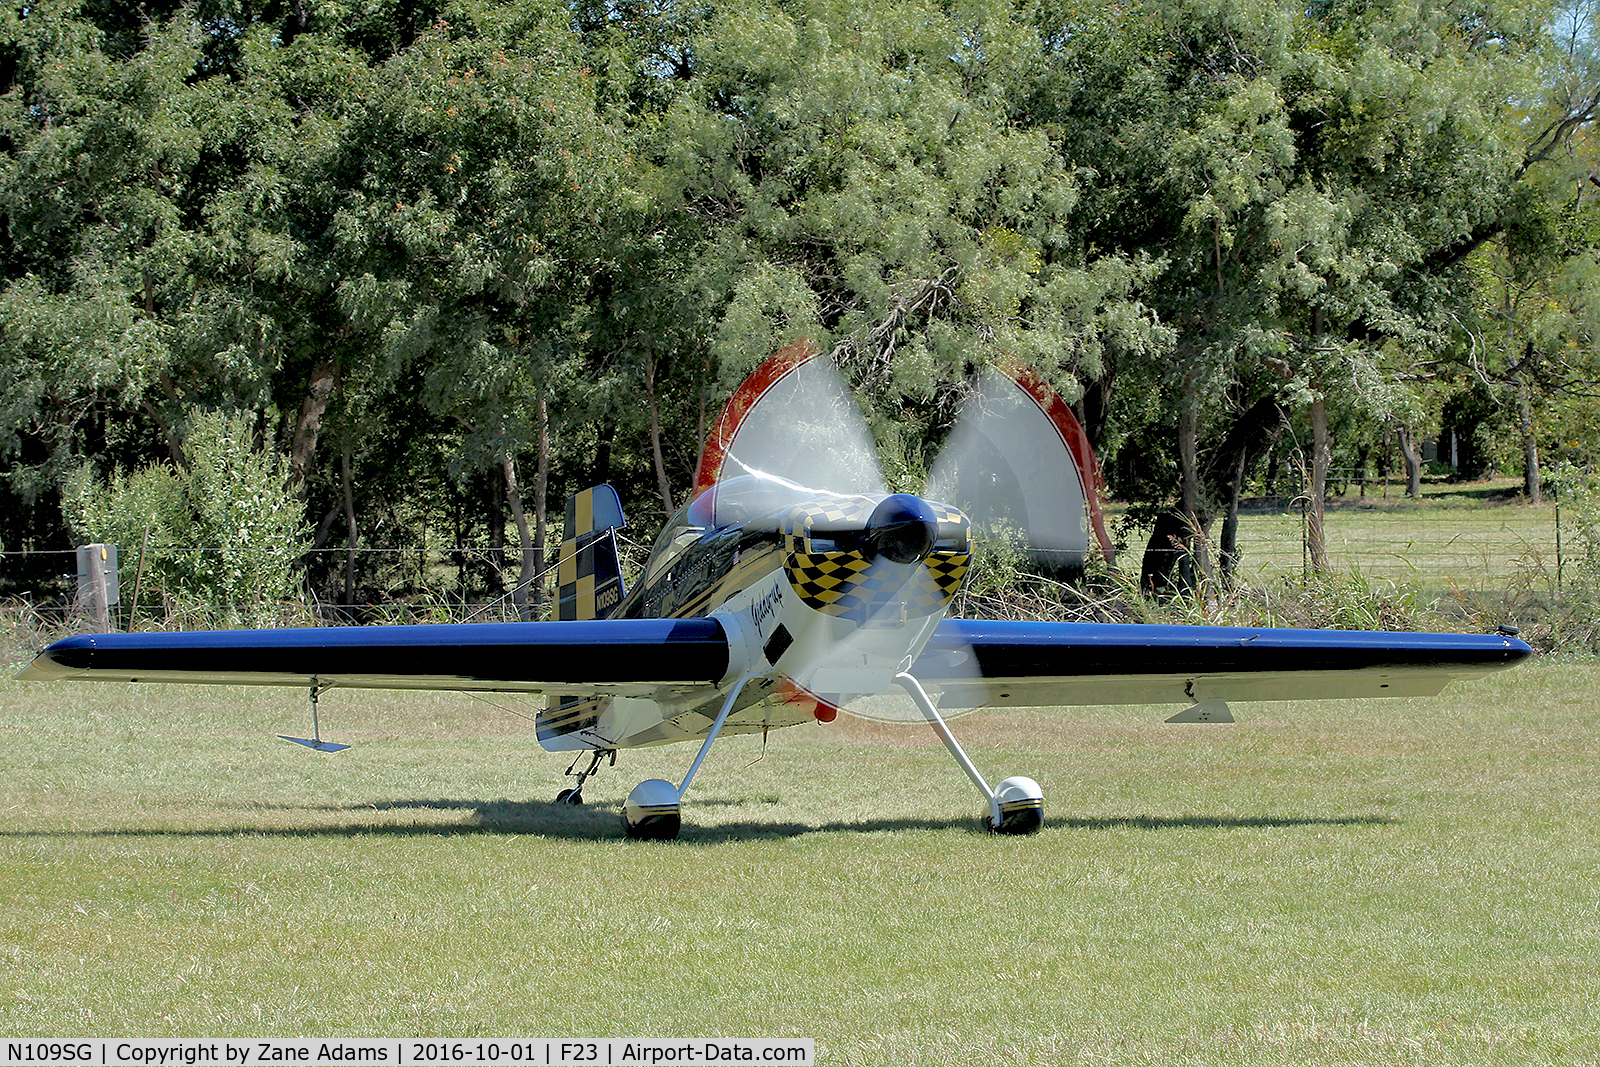 N109SG, 2000 Rihn DR-109 C/N 0011, At the 2016 Ranger, Texas Fly-in